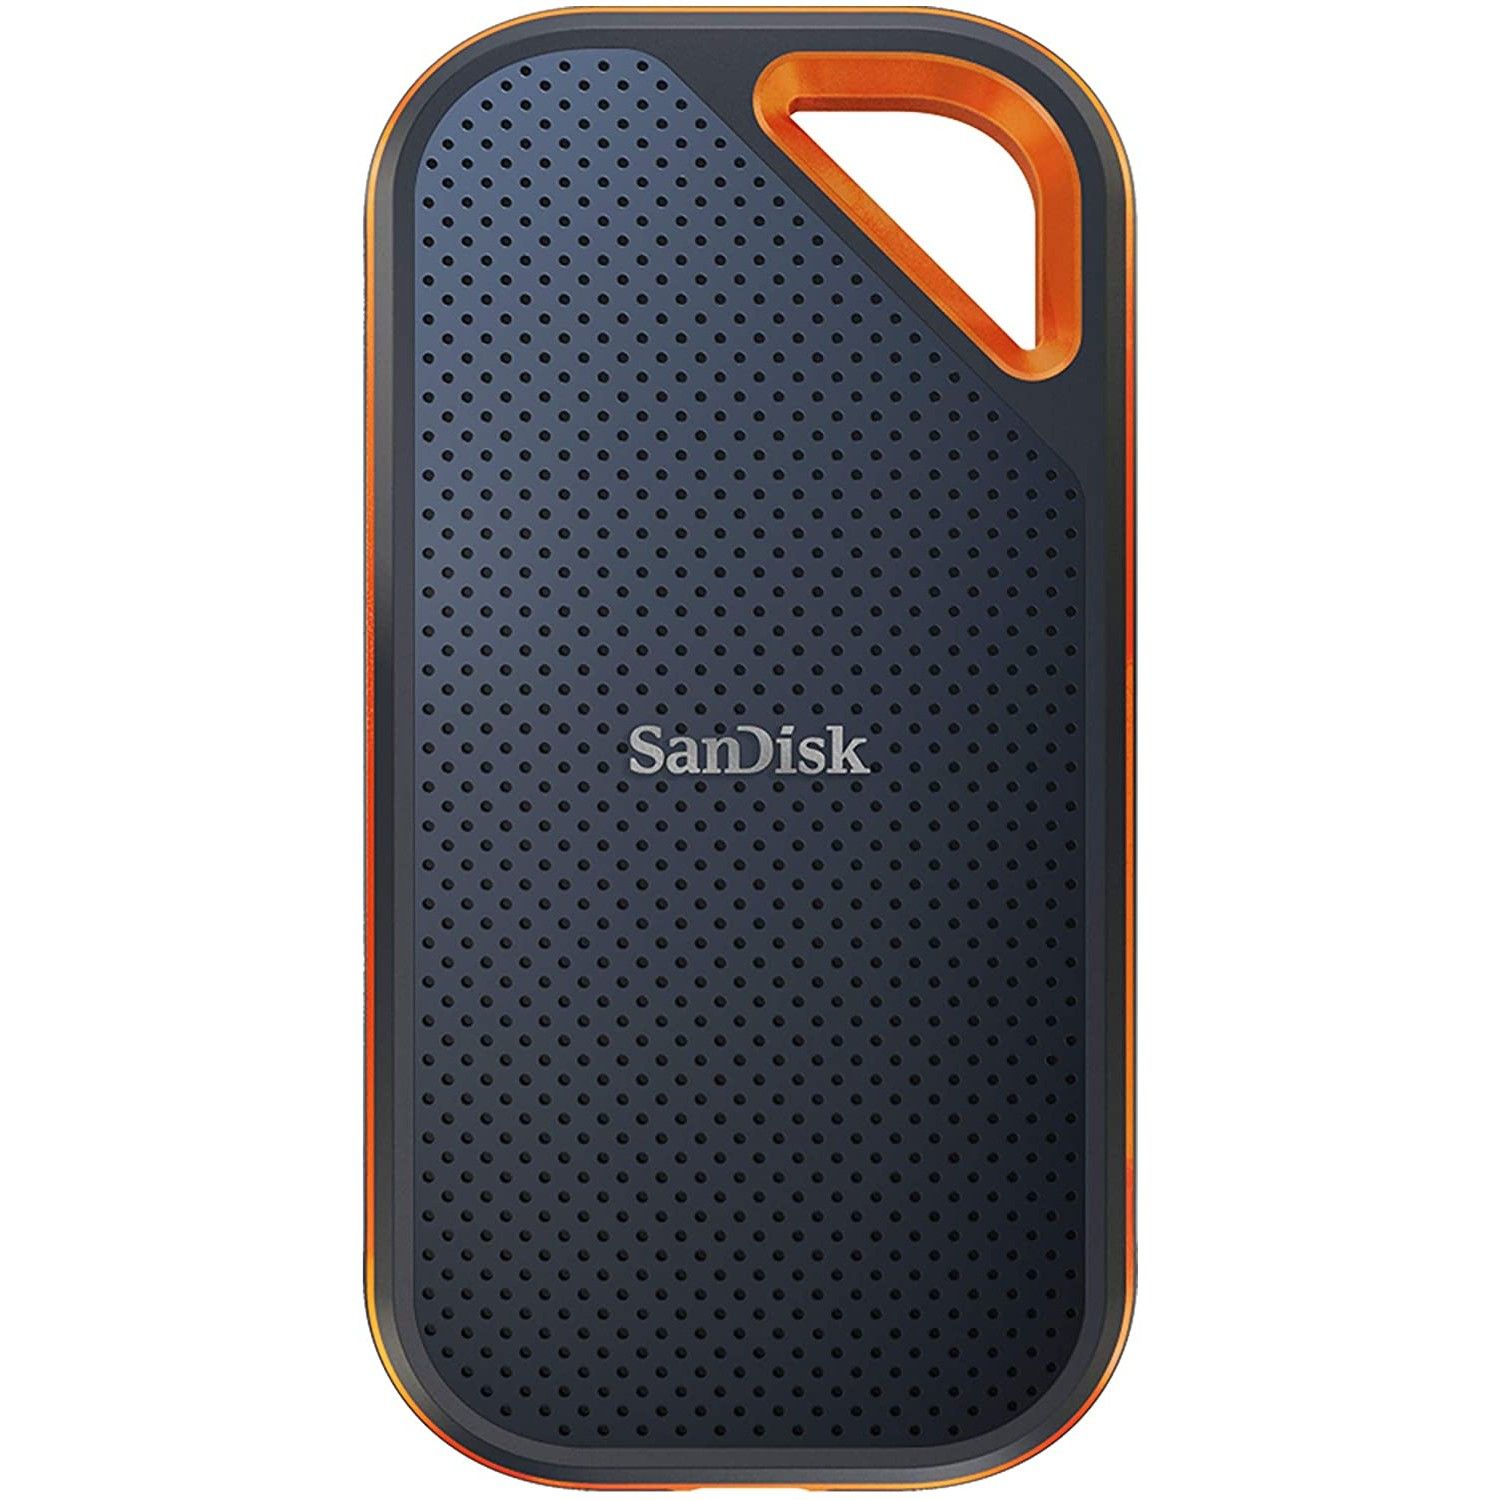 SanDisk Extreme PRO Portable SSD